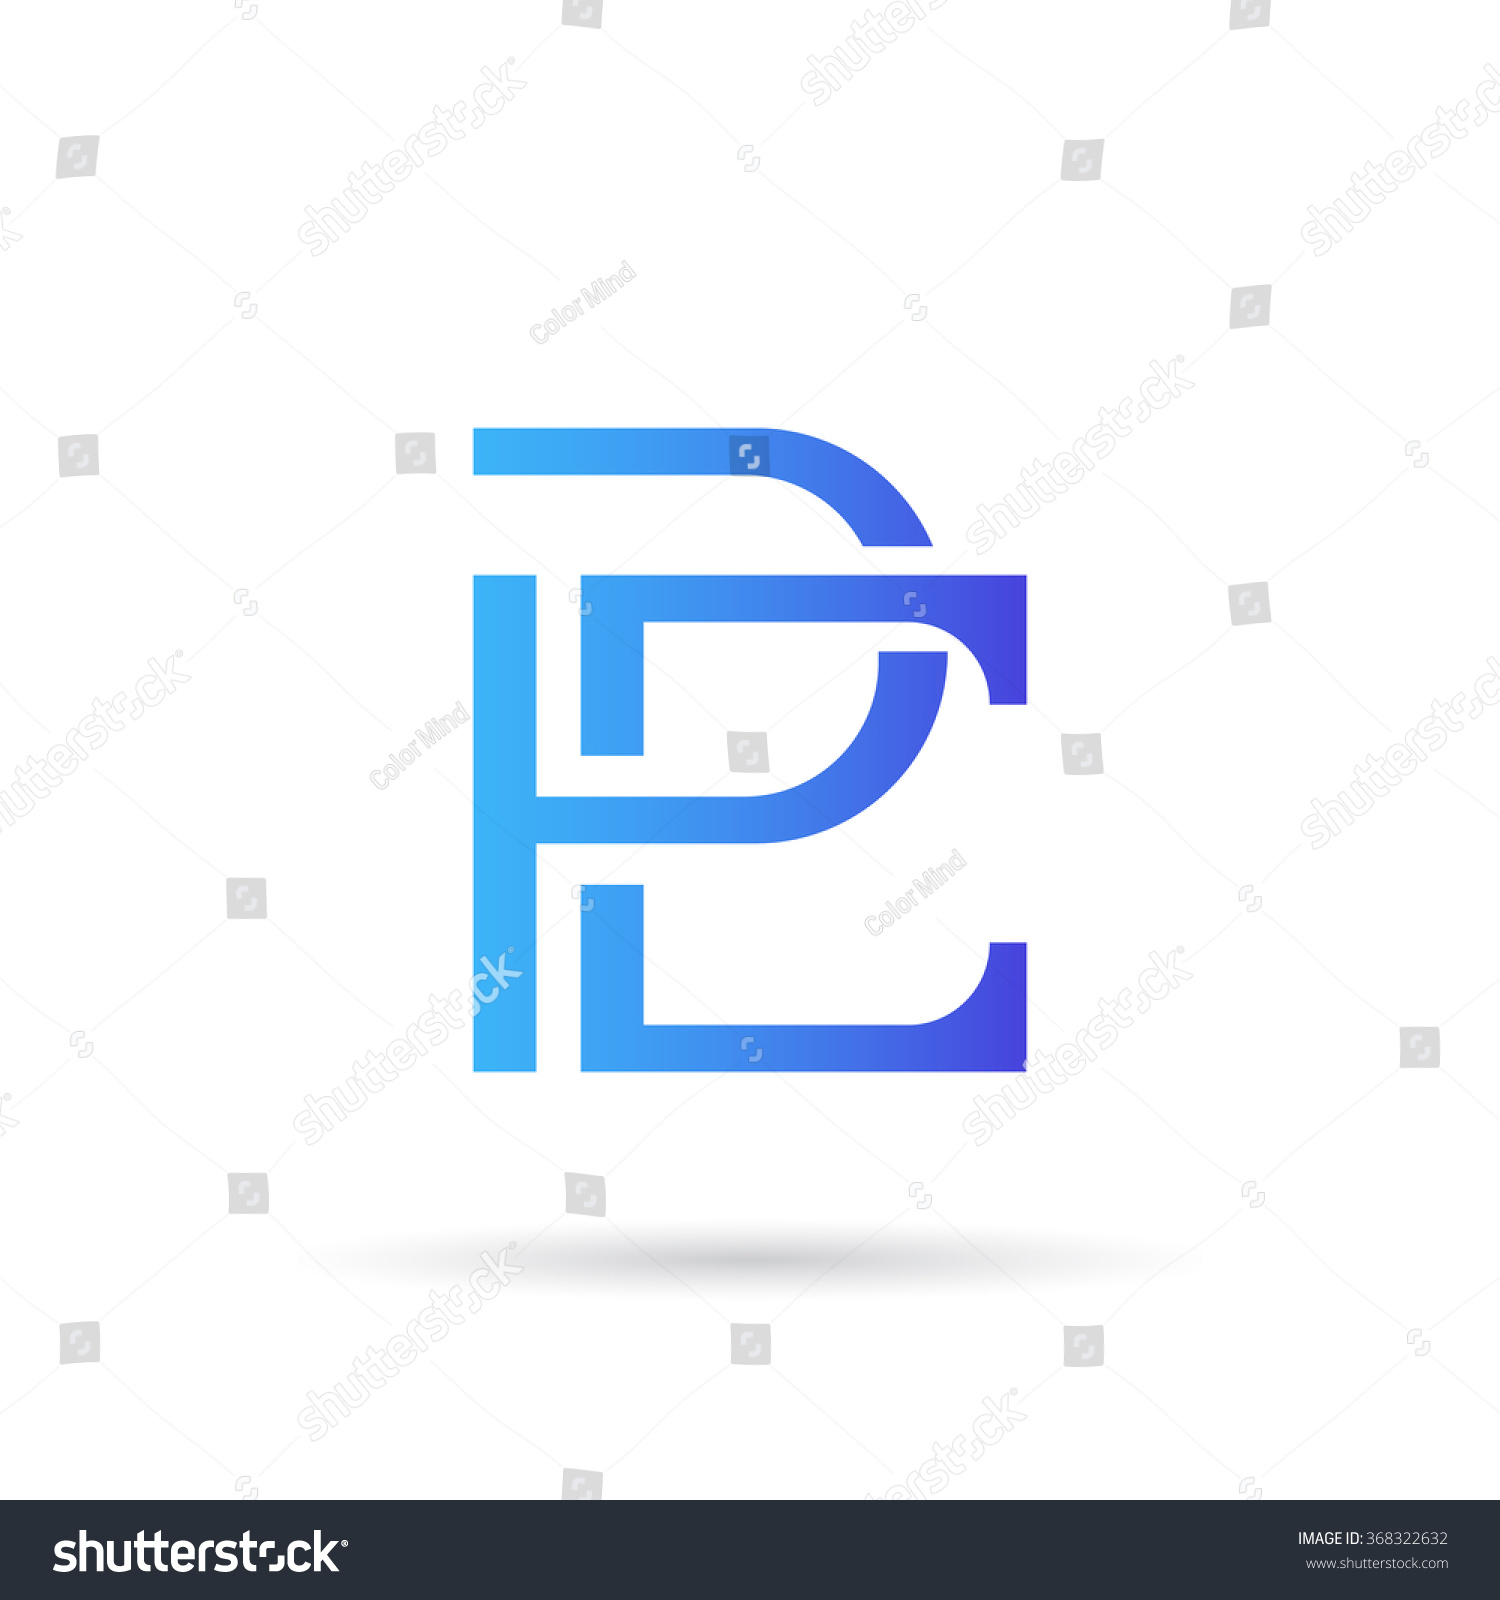 P&E Natuart´s Logo photo - 1